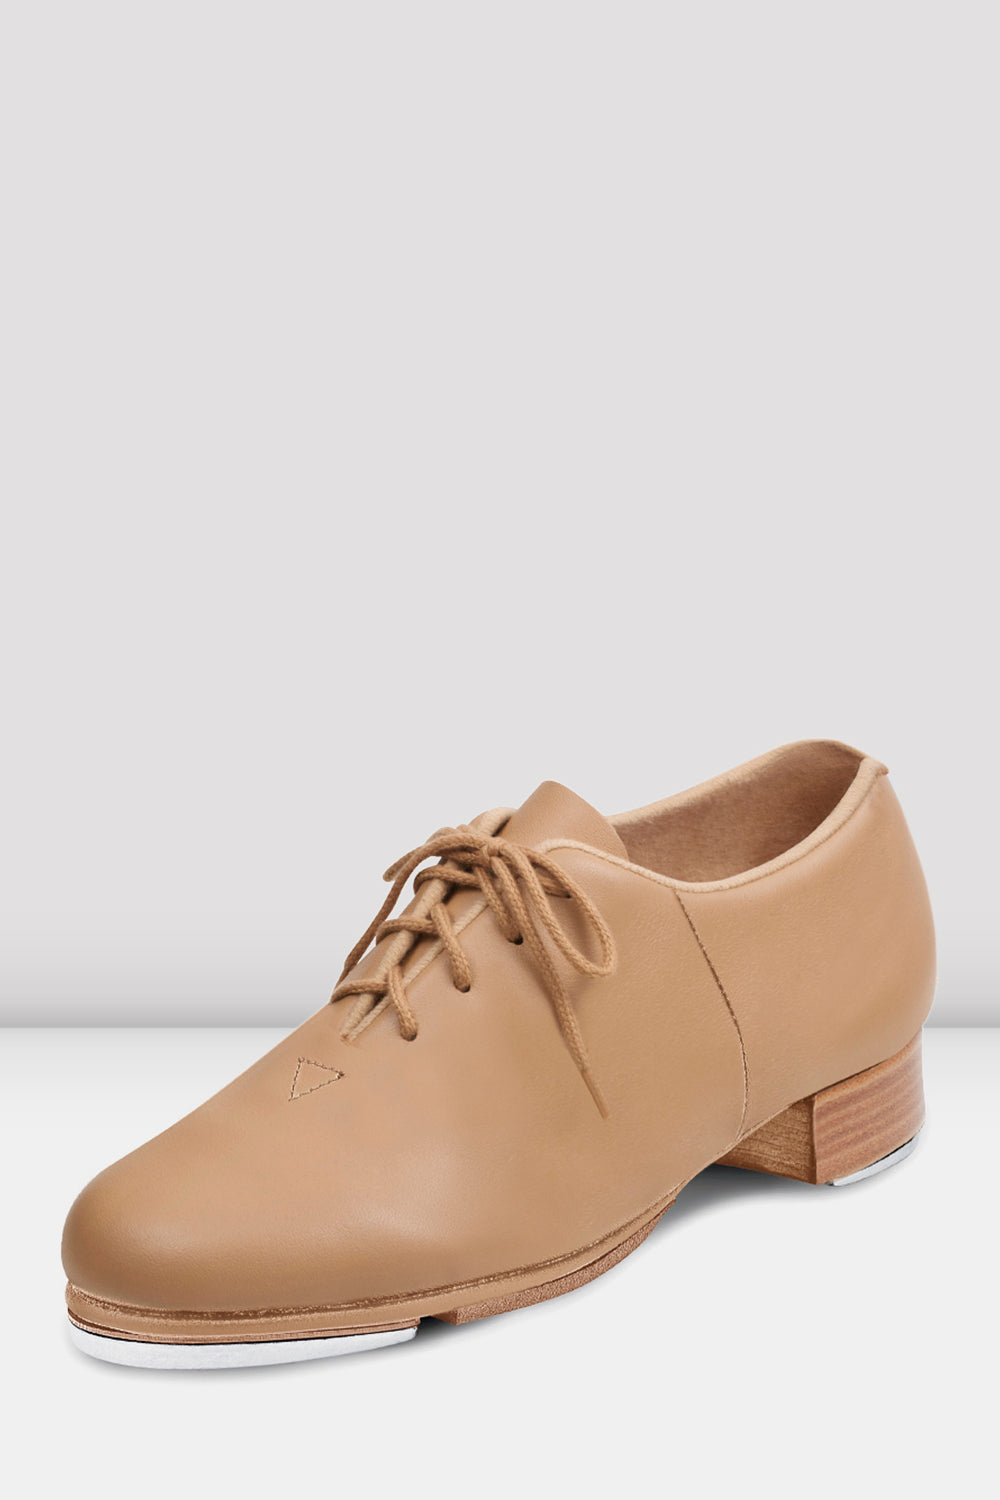 Bloch tan Audeo Jazz Tap leather shoes